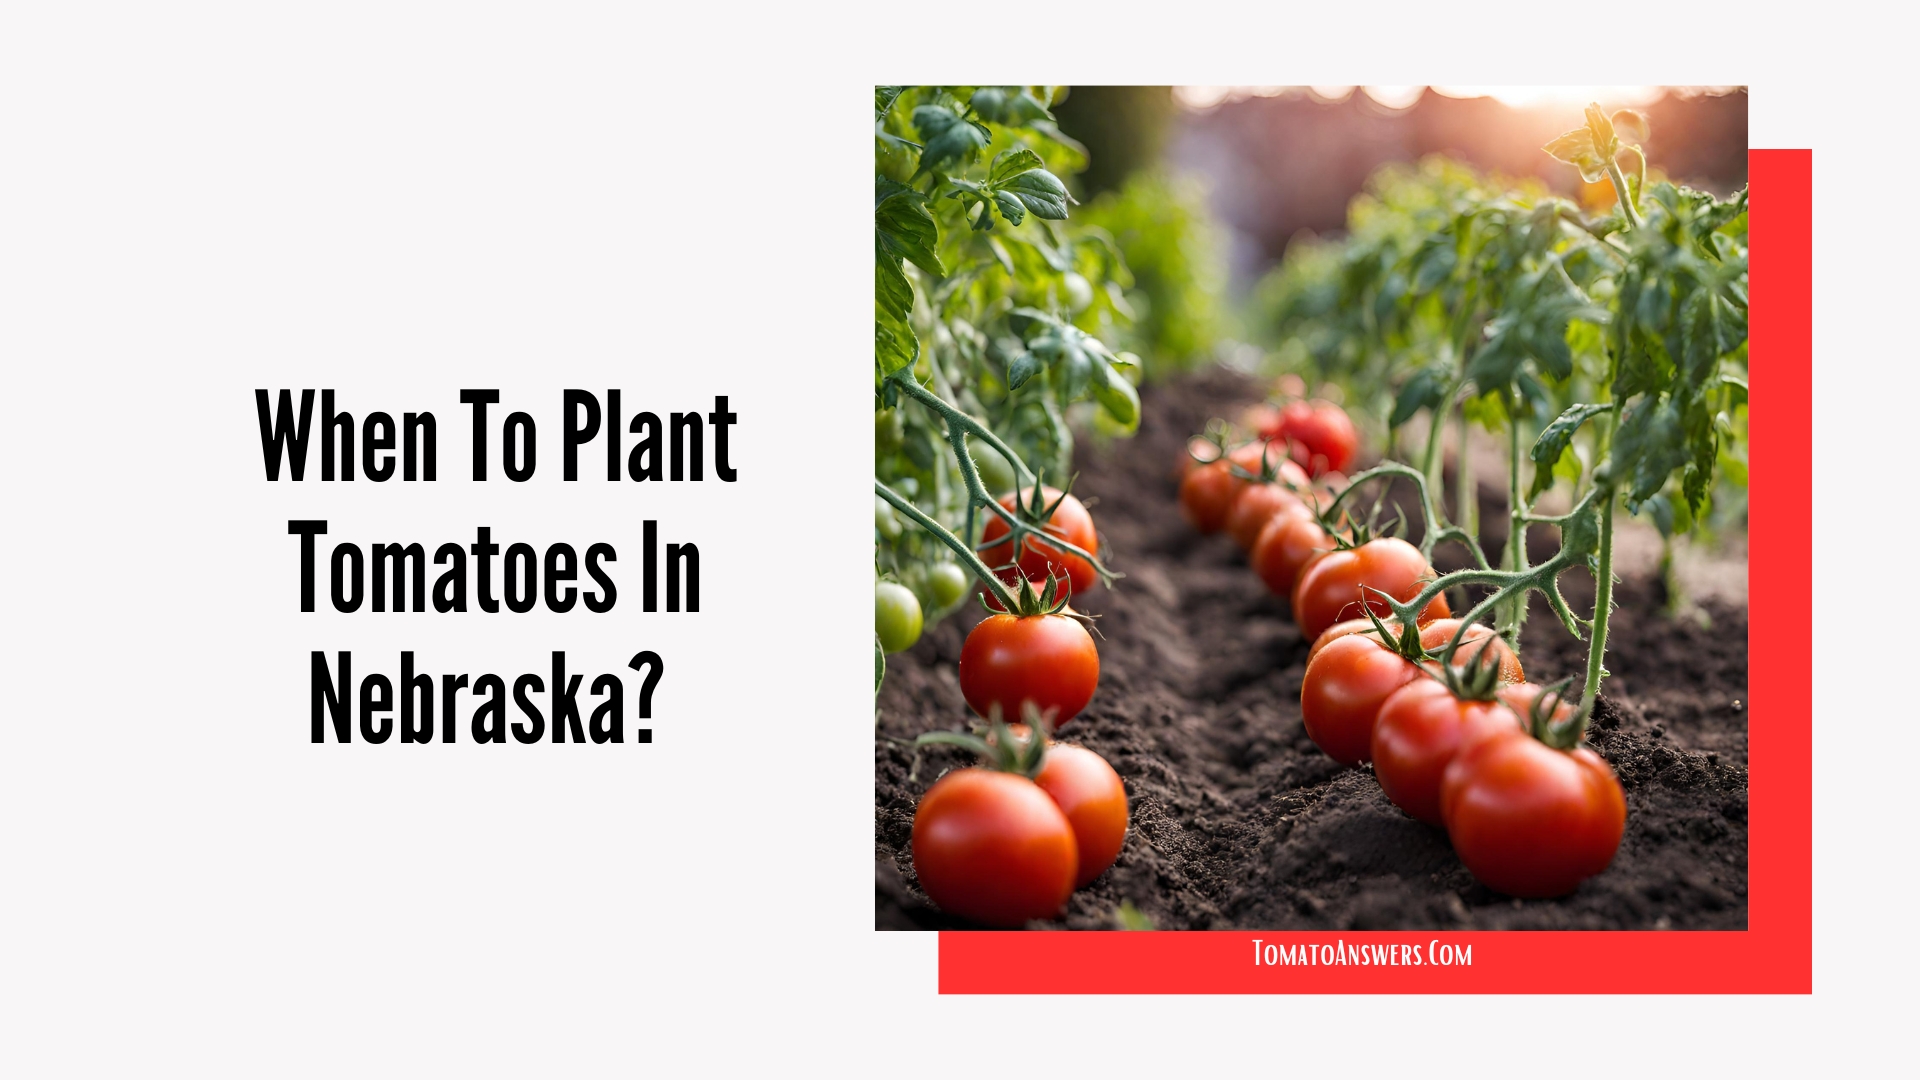 When To Plant Tomatoes In Nebraska?